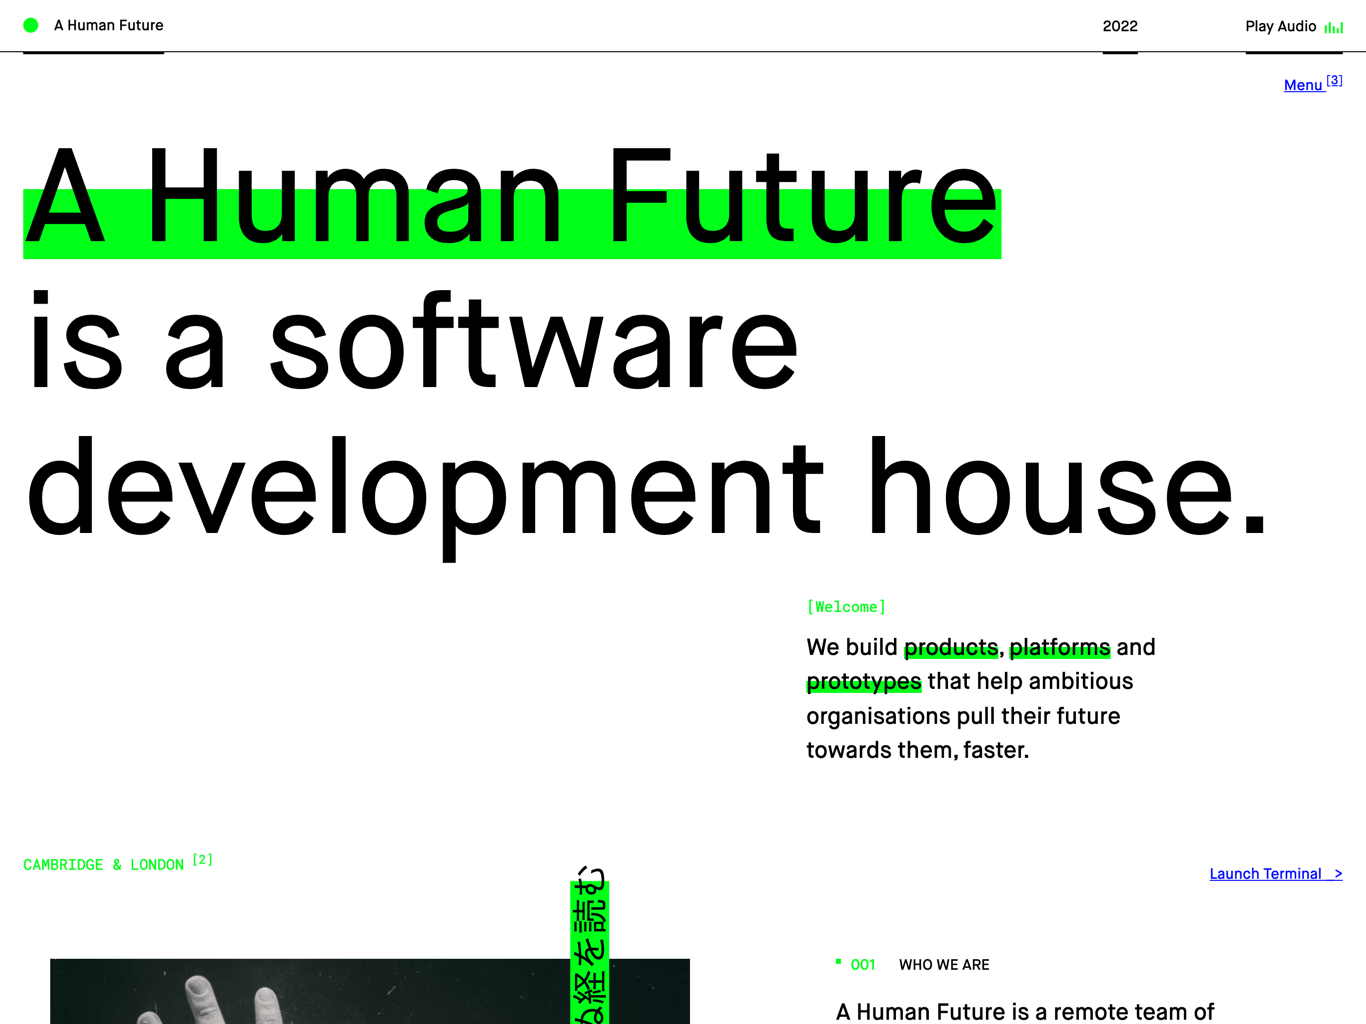 A Human Future